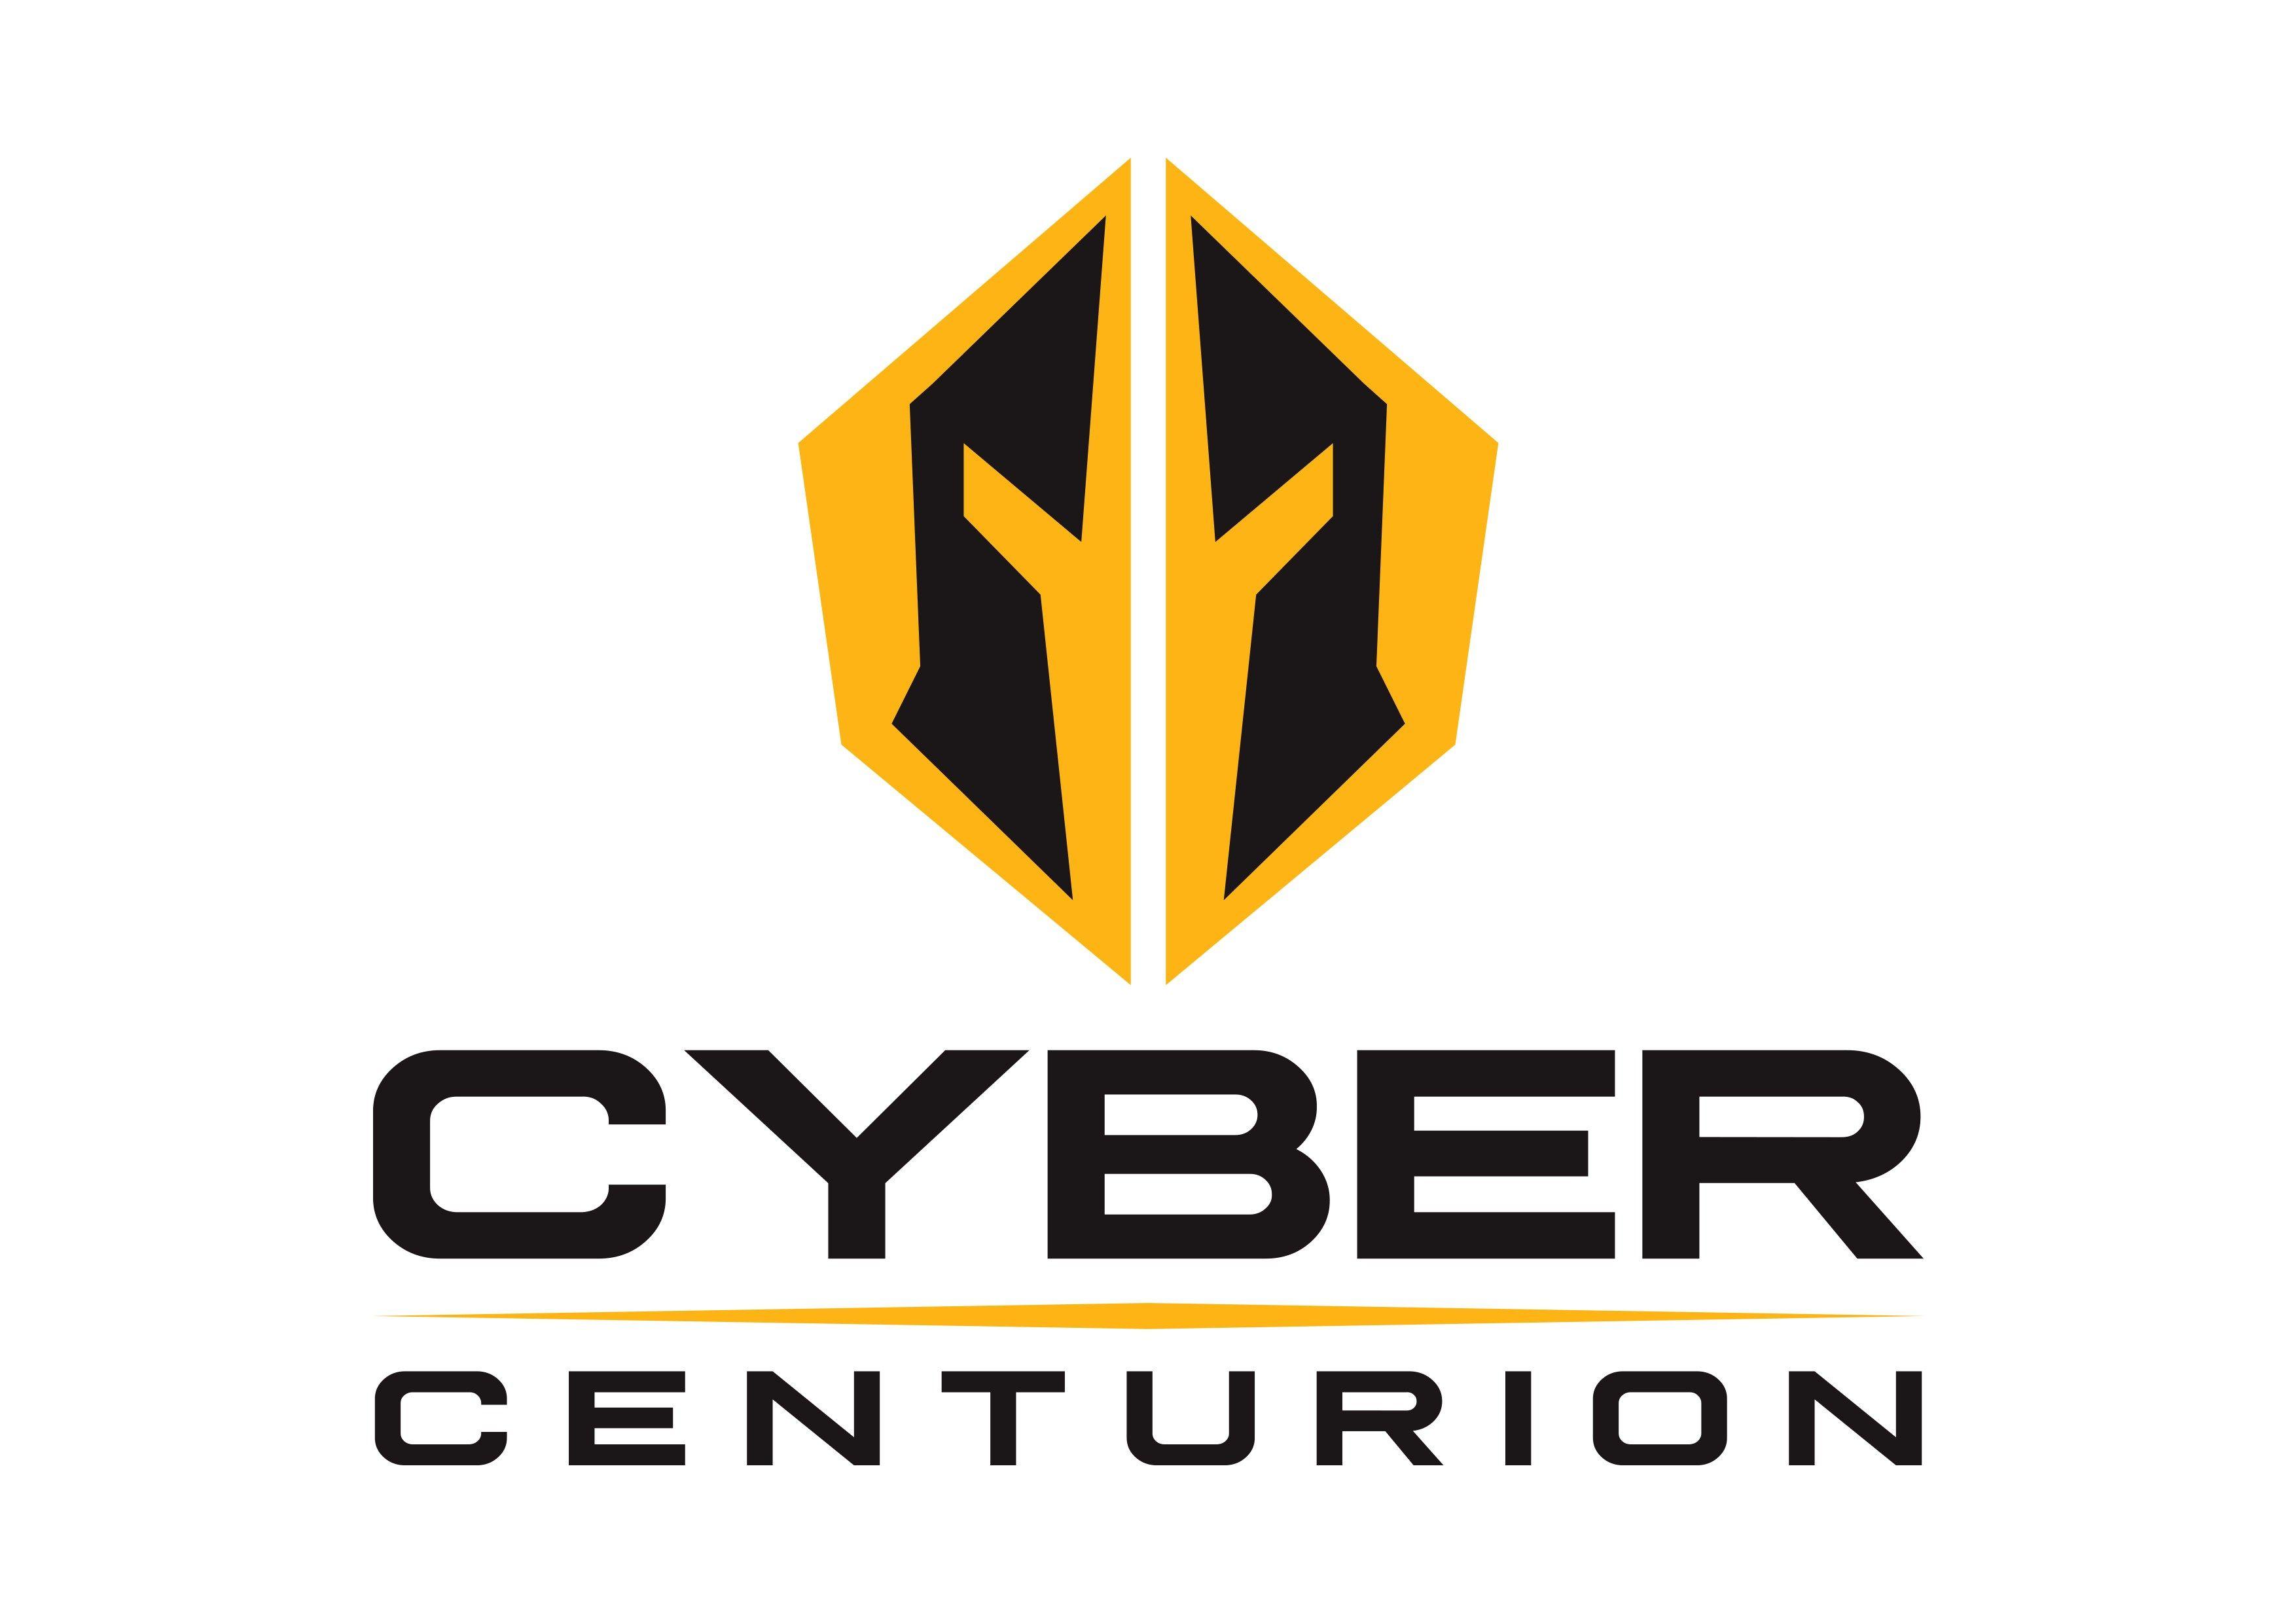 Centurion Logo - CYBER CENTURION LOGO 1